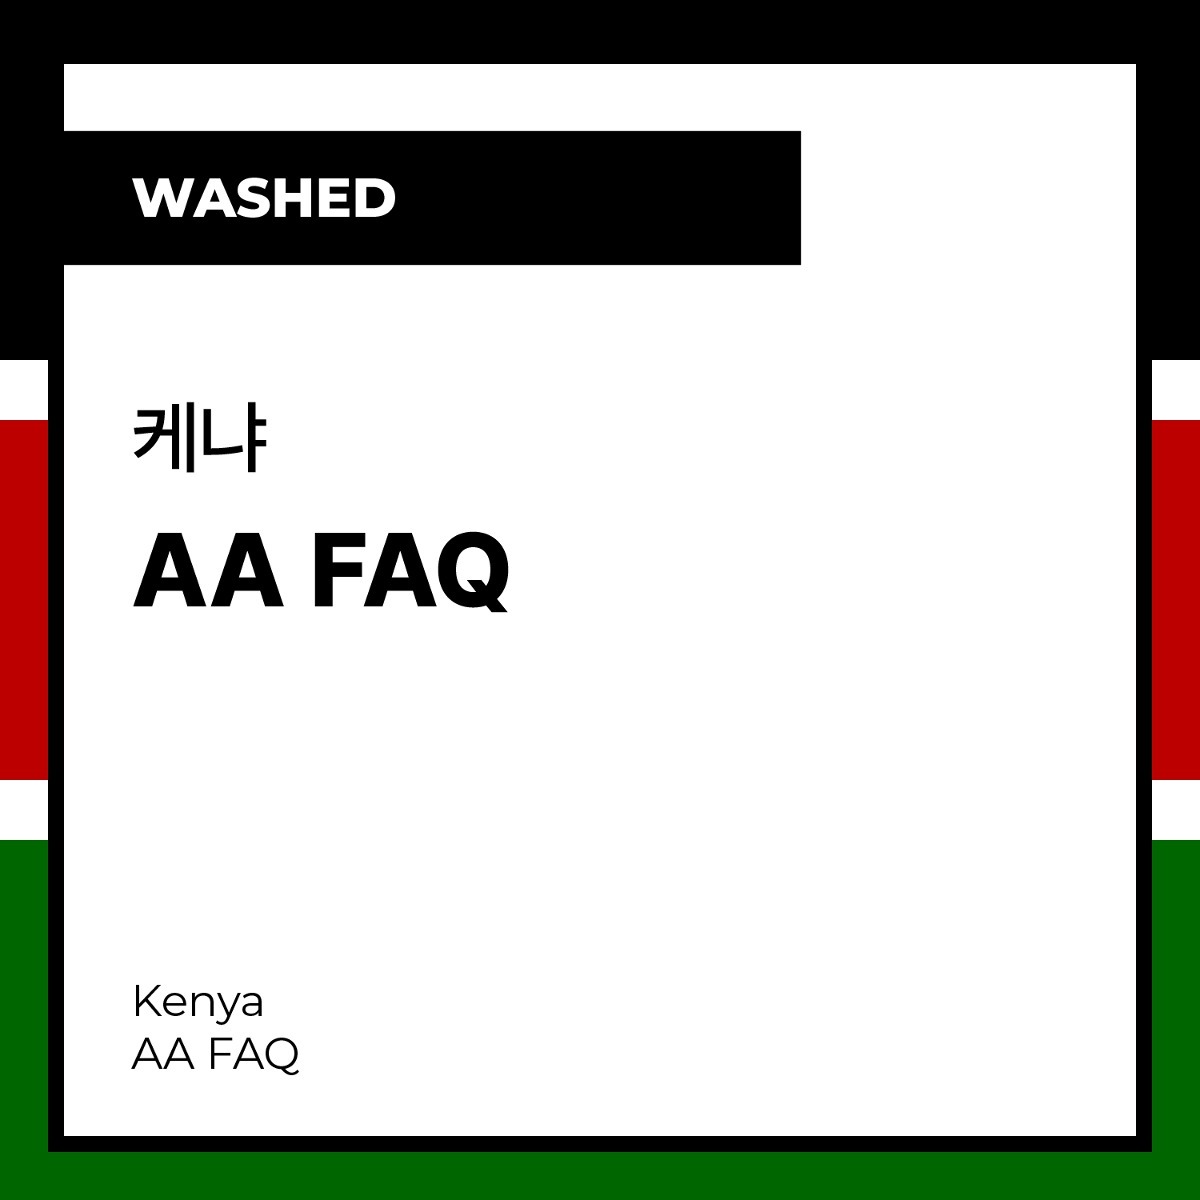 Kenya AA FAQ (Washed) 케냐 AA FAQ (워시드)